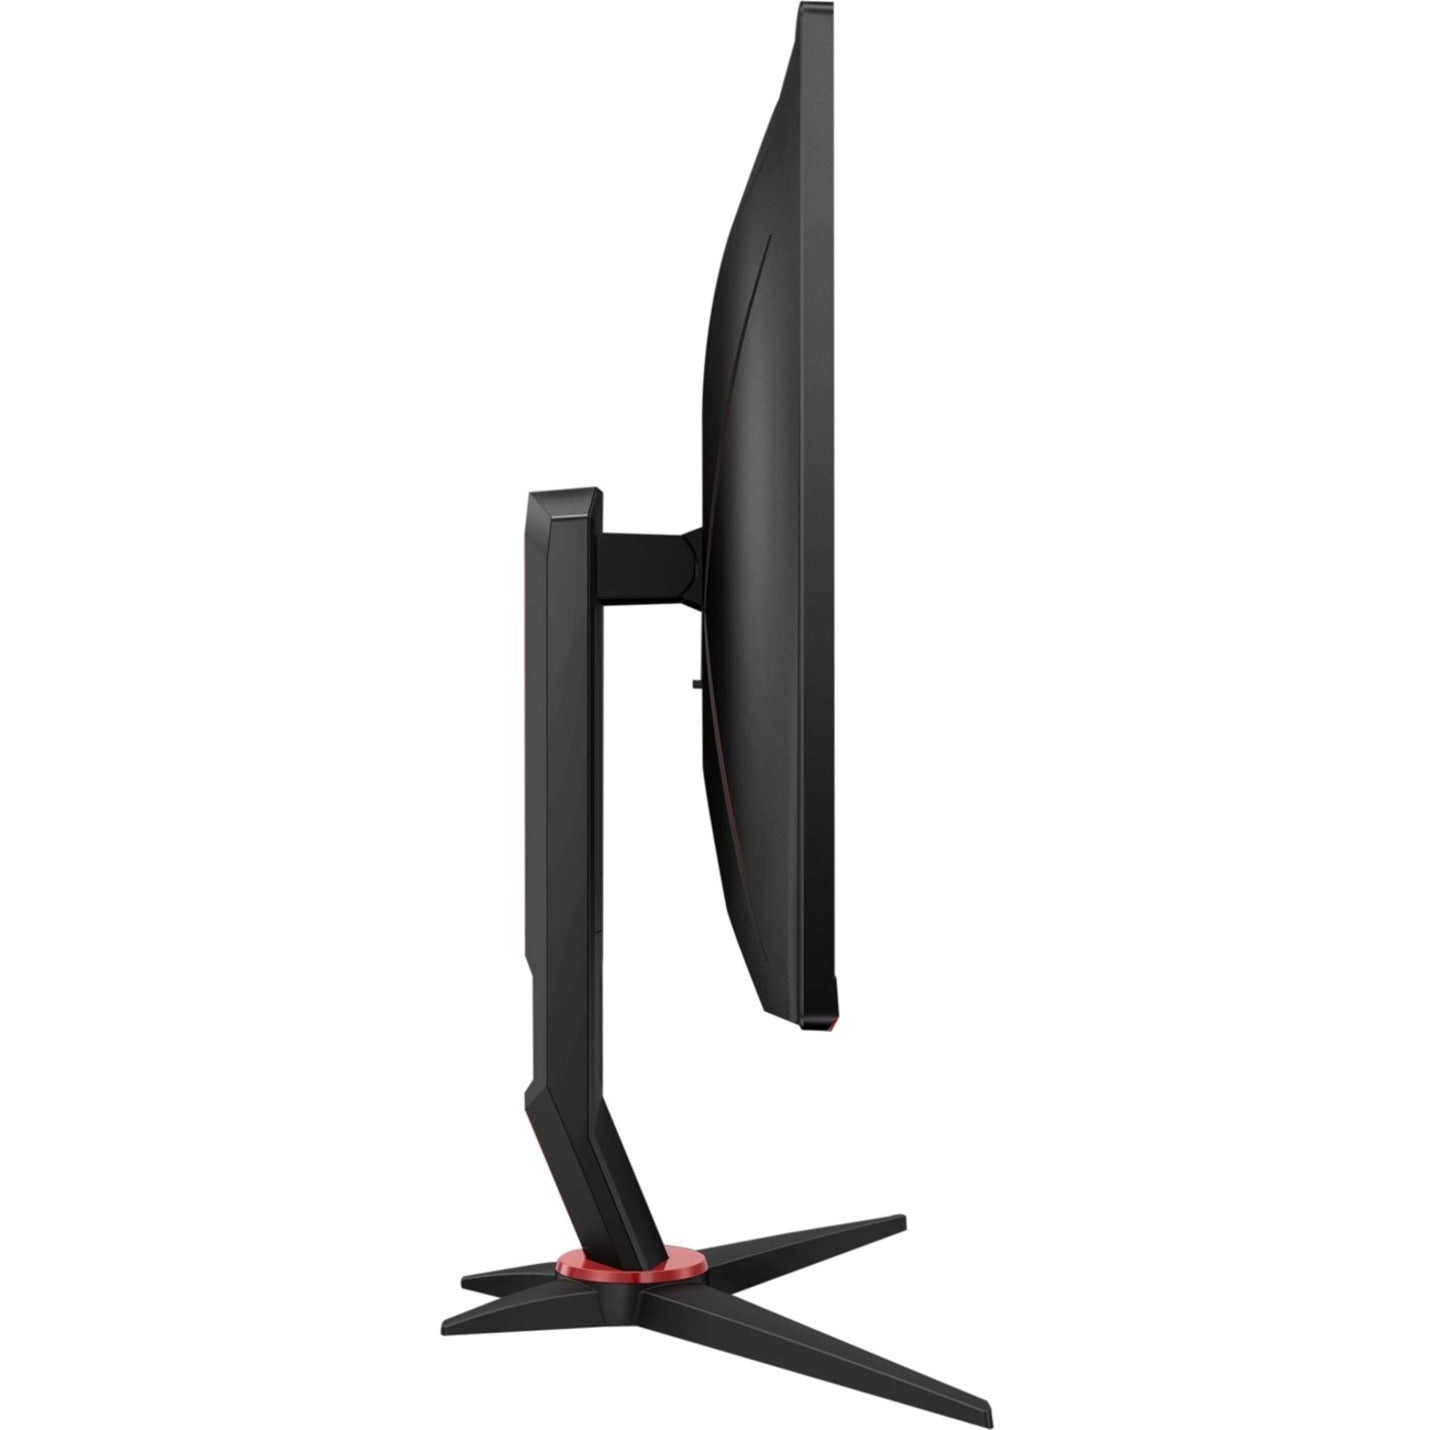 AOC 27G2E 27" Full HD Gaming LCD Monitor - Black, Red, 120Hz Refresh Rate, FreeSync